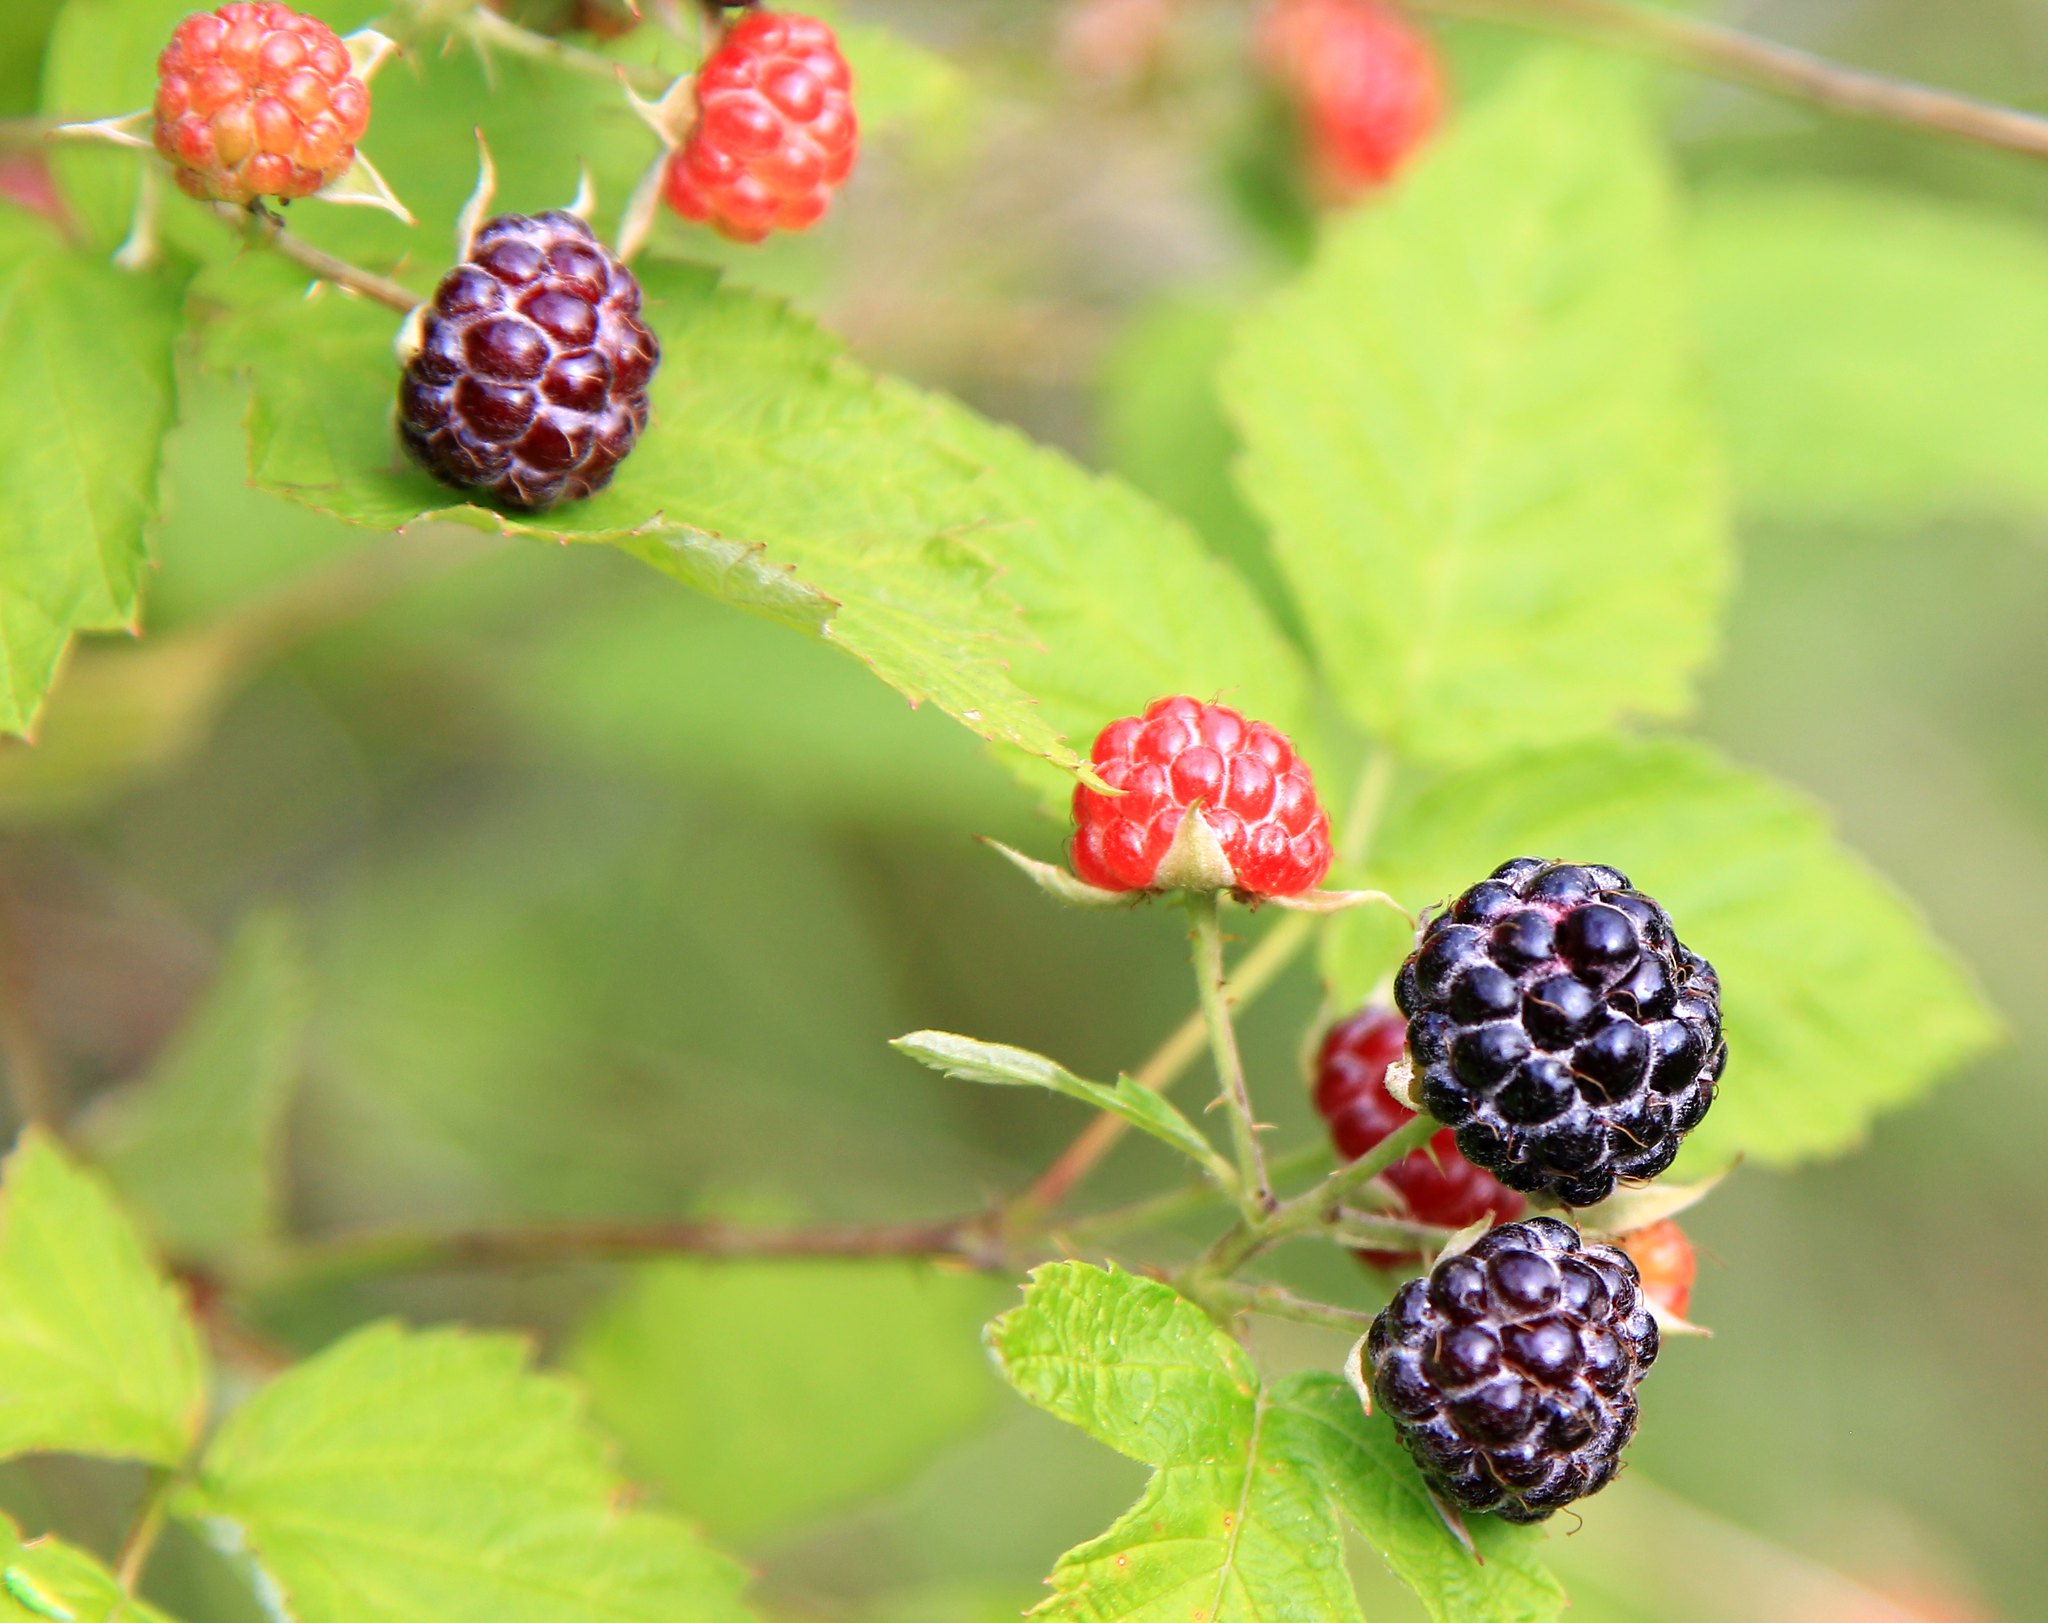 Species spotlight: Black raspberry